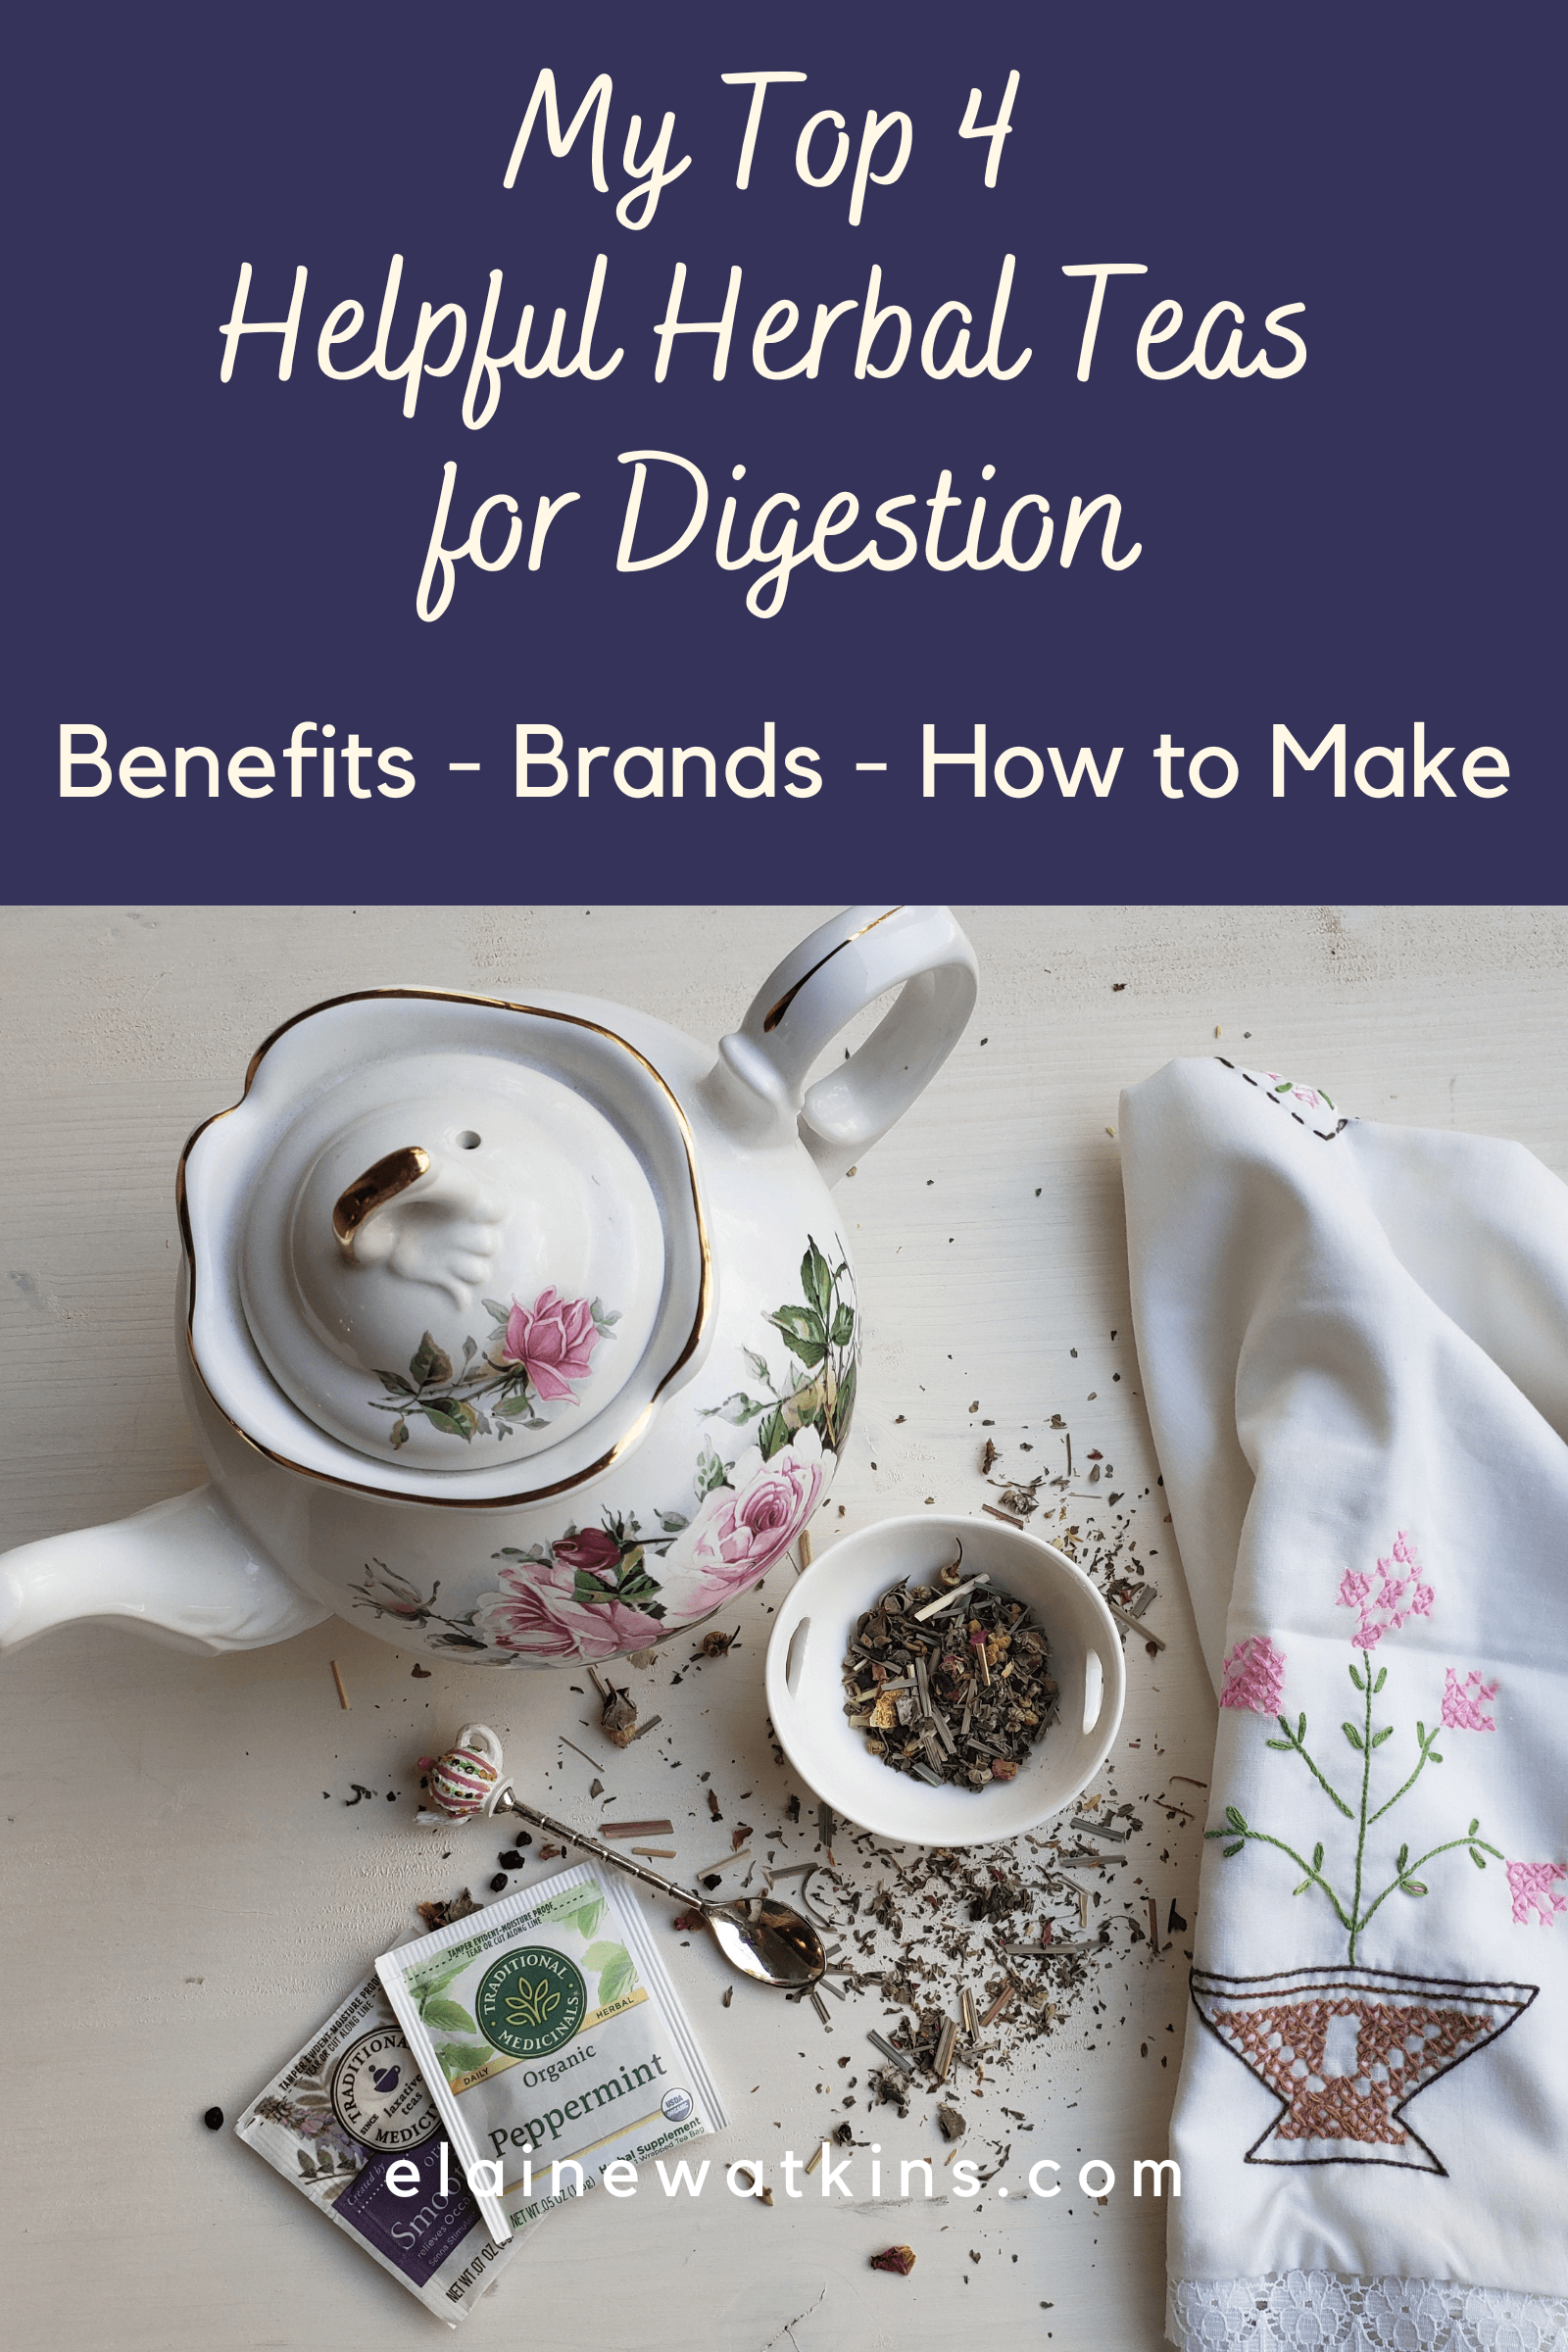 My Top 4 Helpful Herbal Teas for Digestion